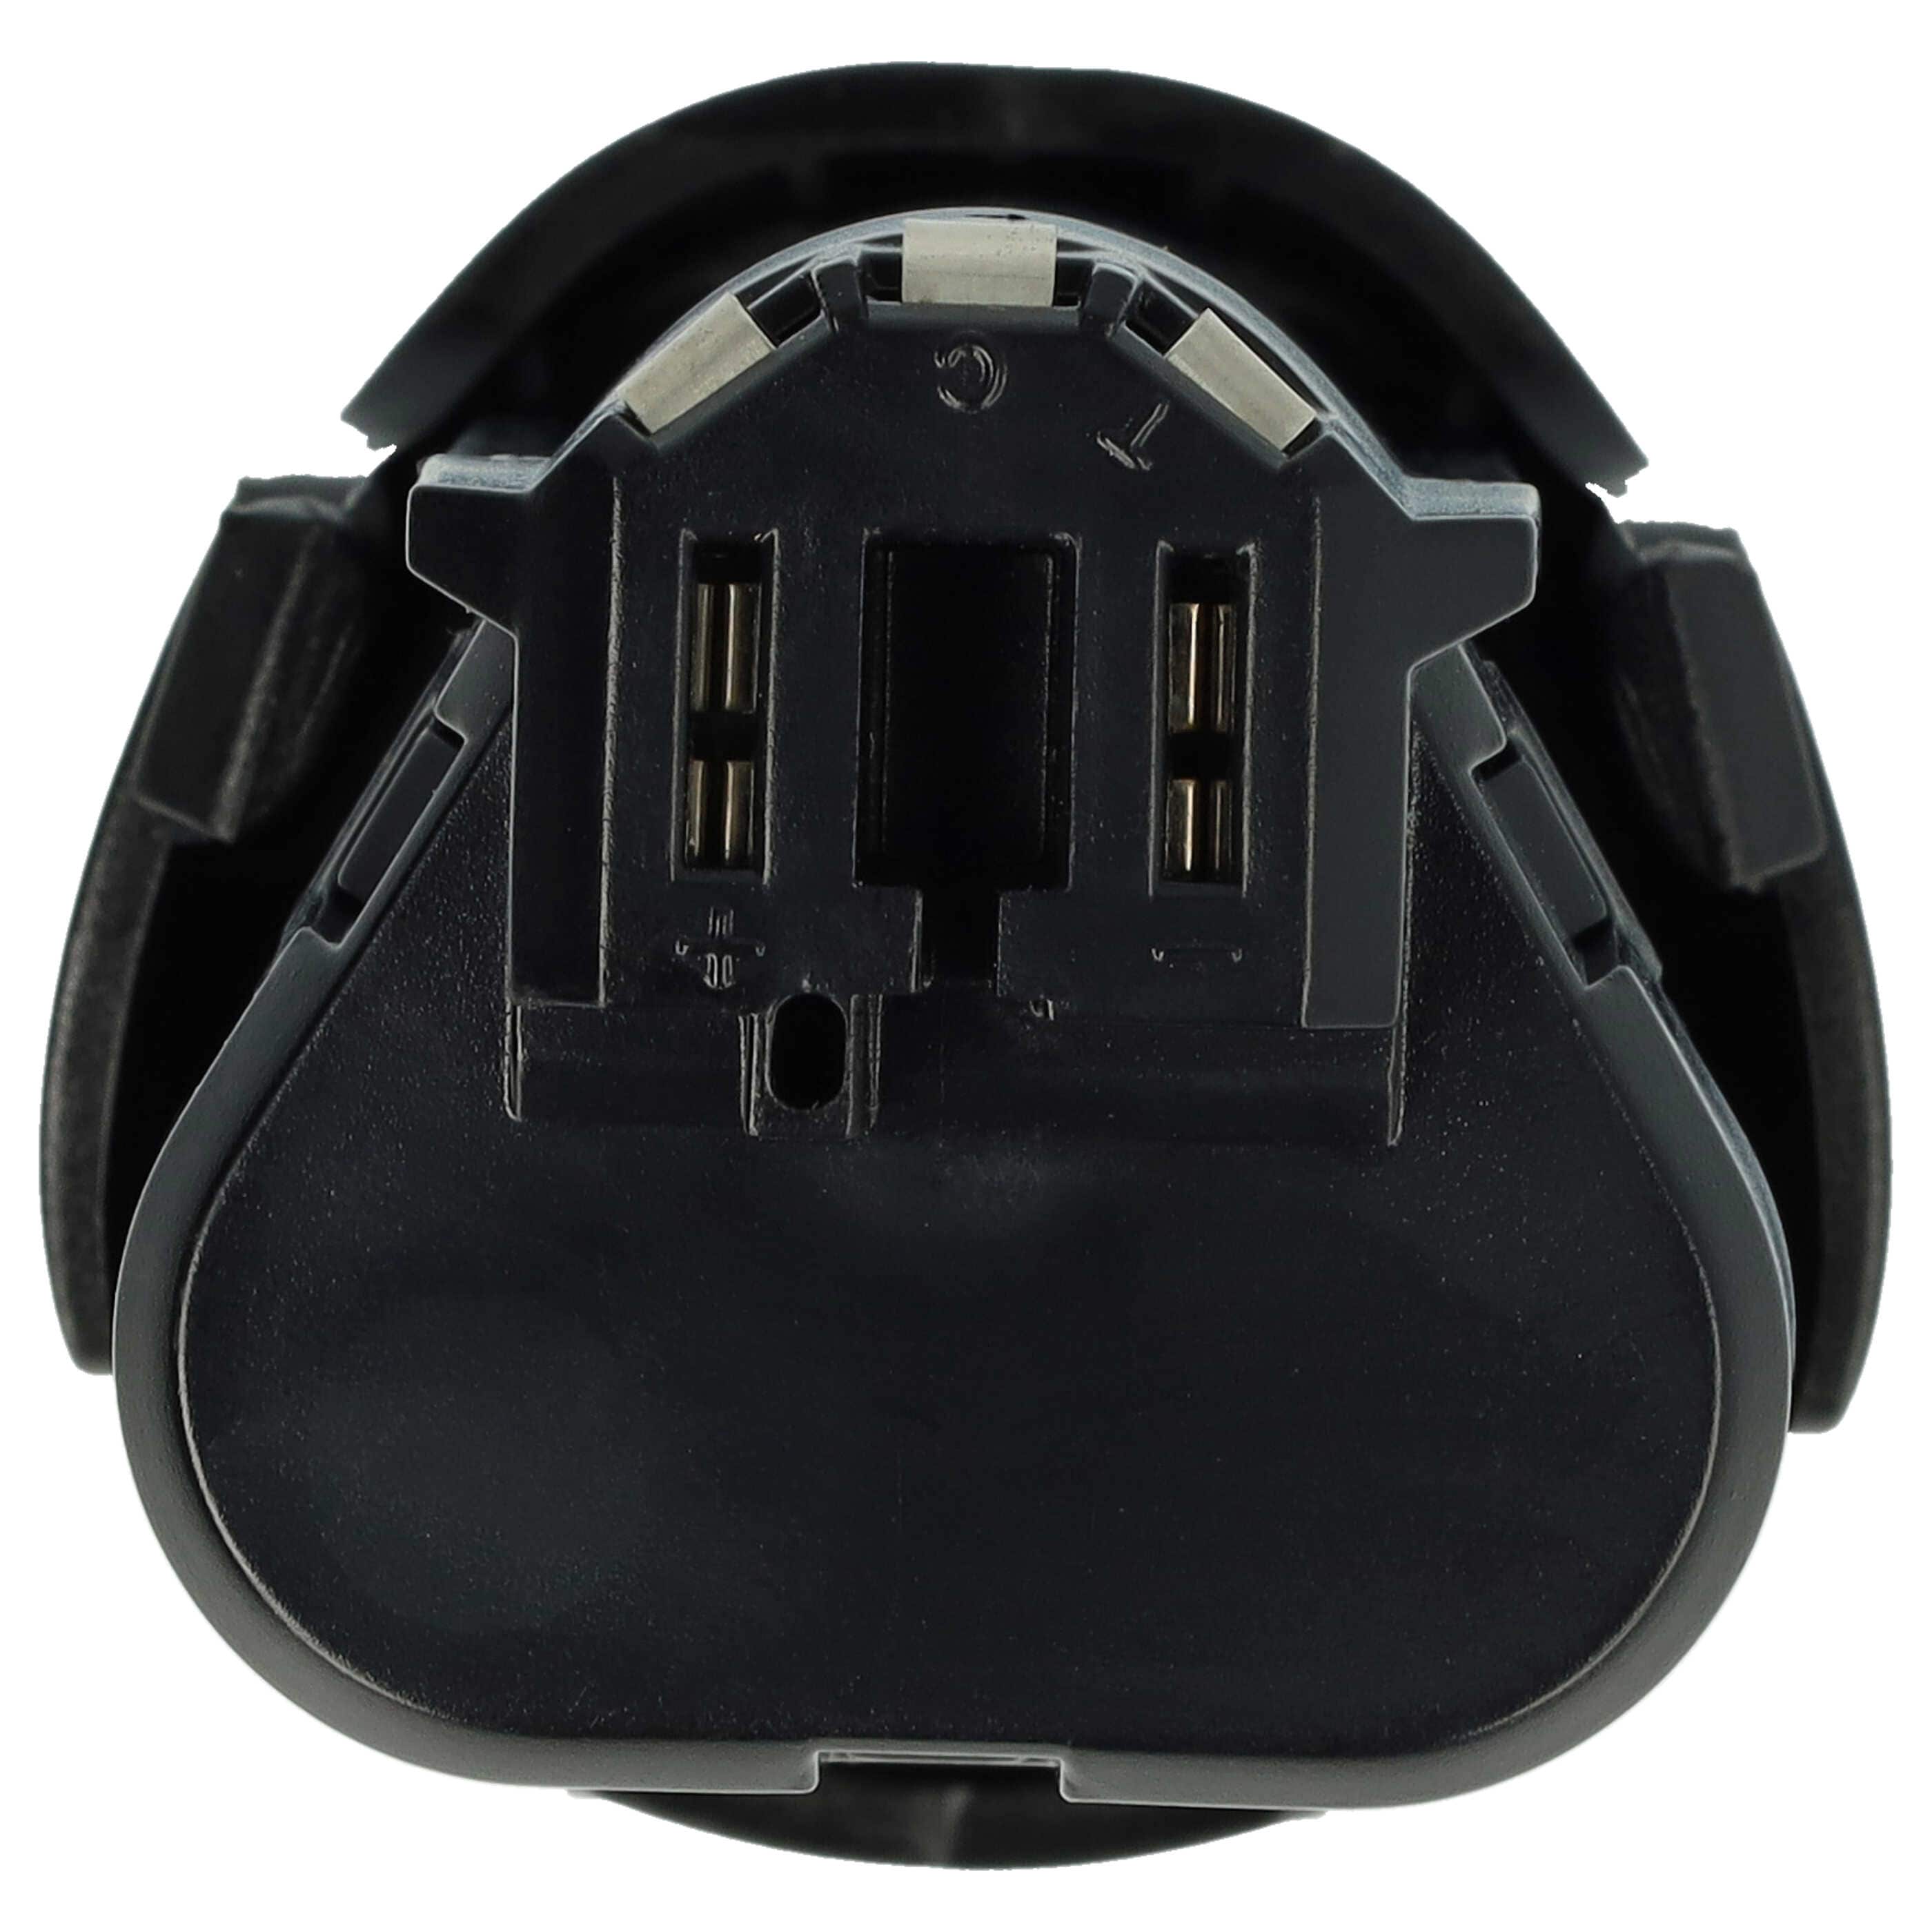 Akumulator do elektronarzędzi Bosch PSR 10.8 Li-2 / Dremel 875, 8200, 8220, 8300 - 2000 mAh, 10,8 V, Li-Ion